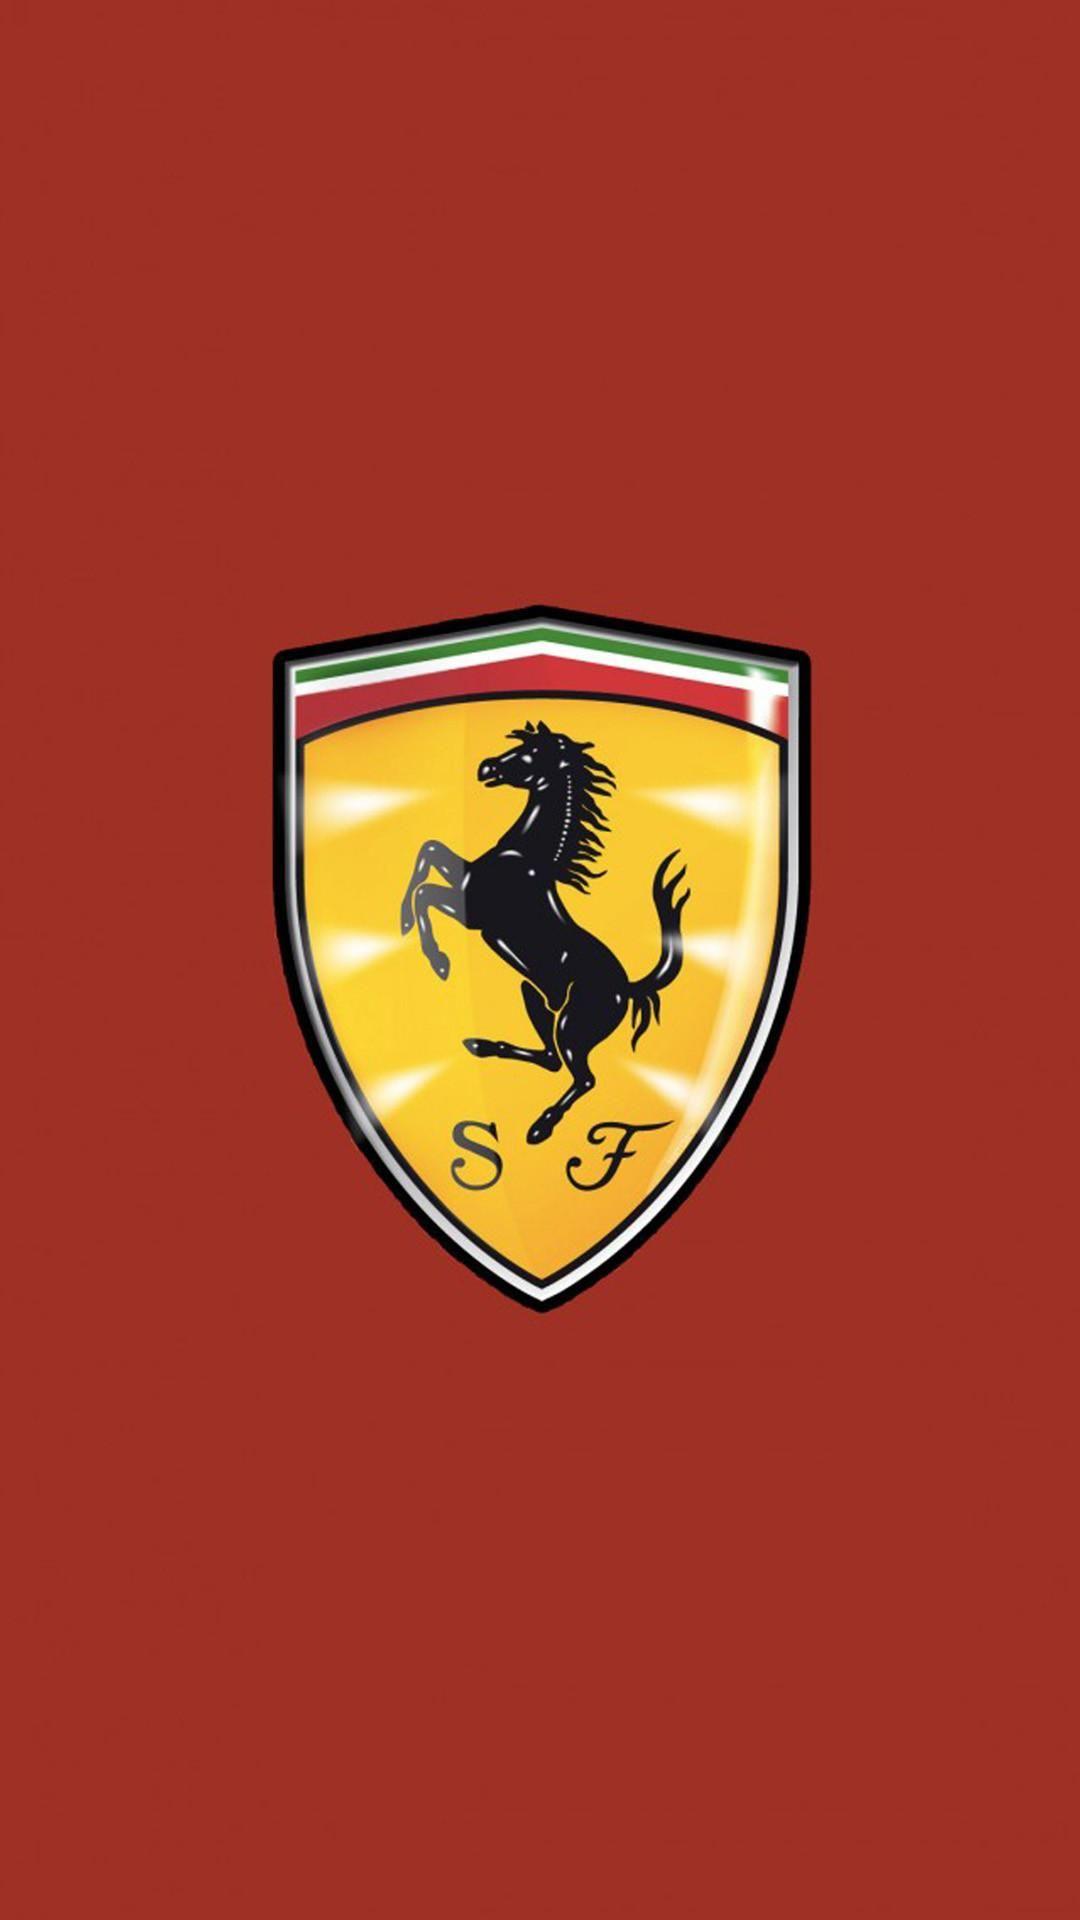 Lamborghini Logo 4k Wallpapers - Top Free Lamborghini Logo 4k ...